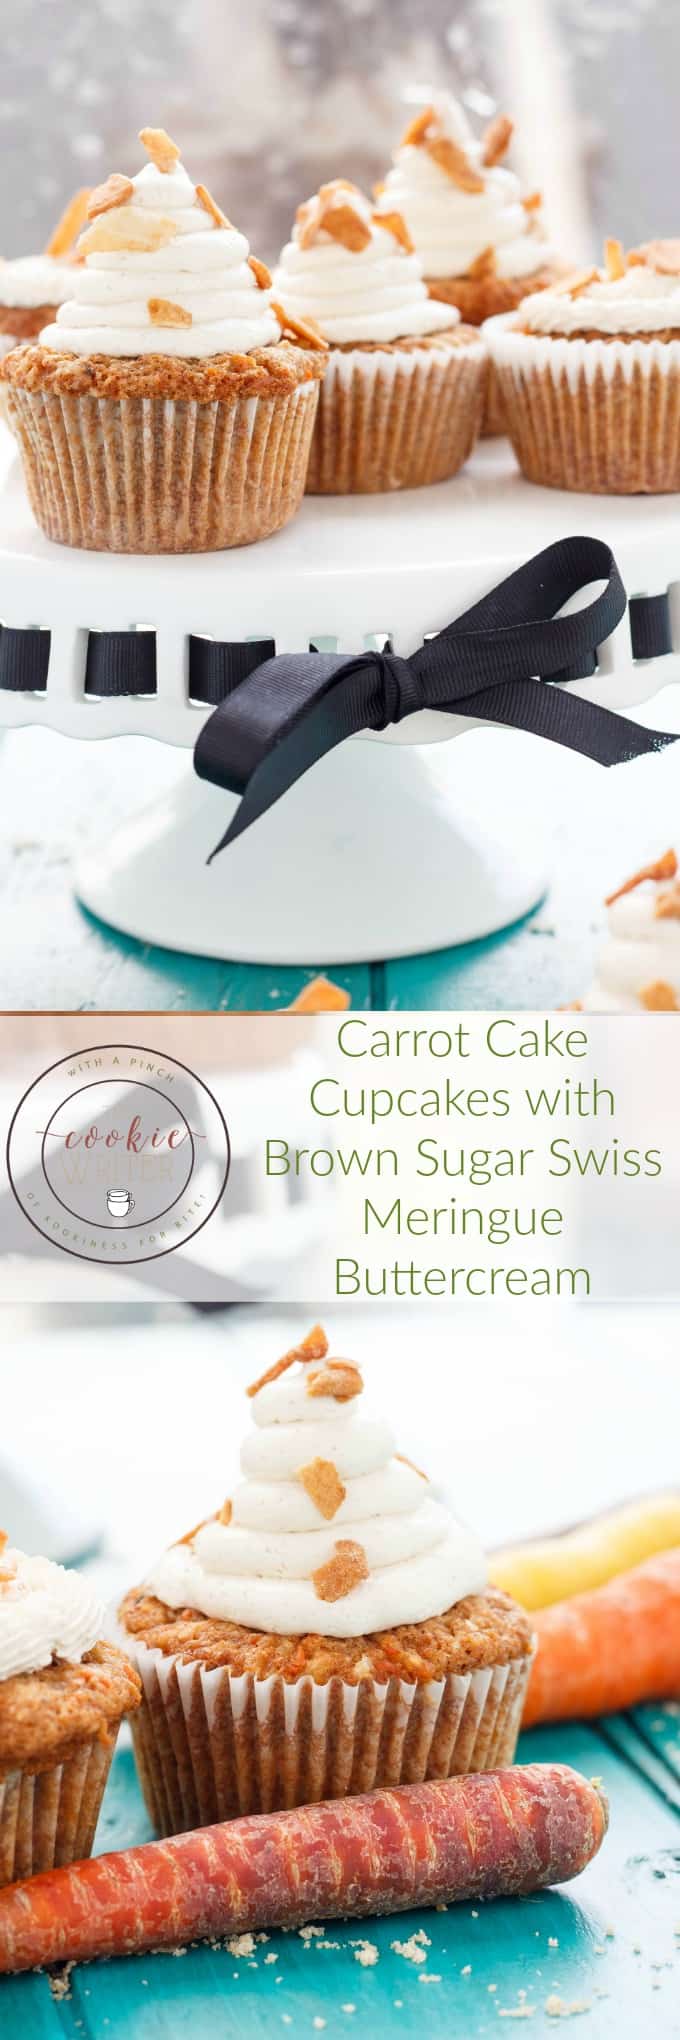 Carrot Cake Cupcakes with Brown Sugar Swiss Meringue Buttercream